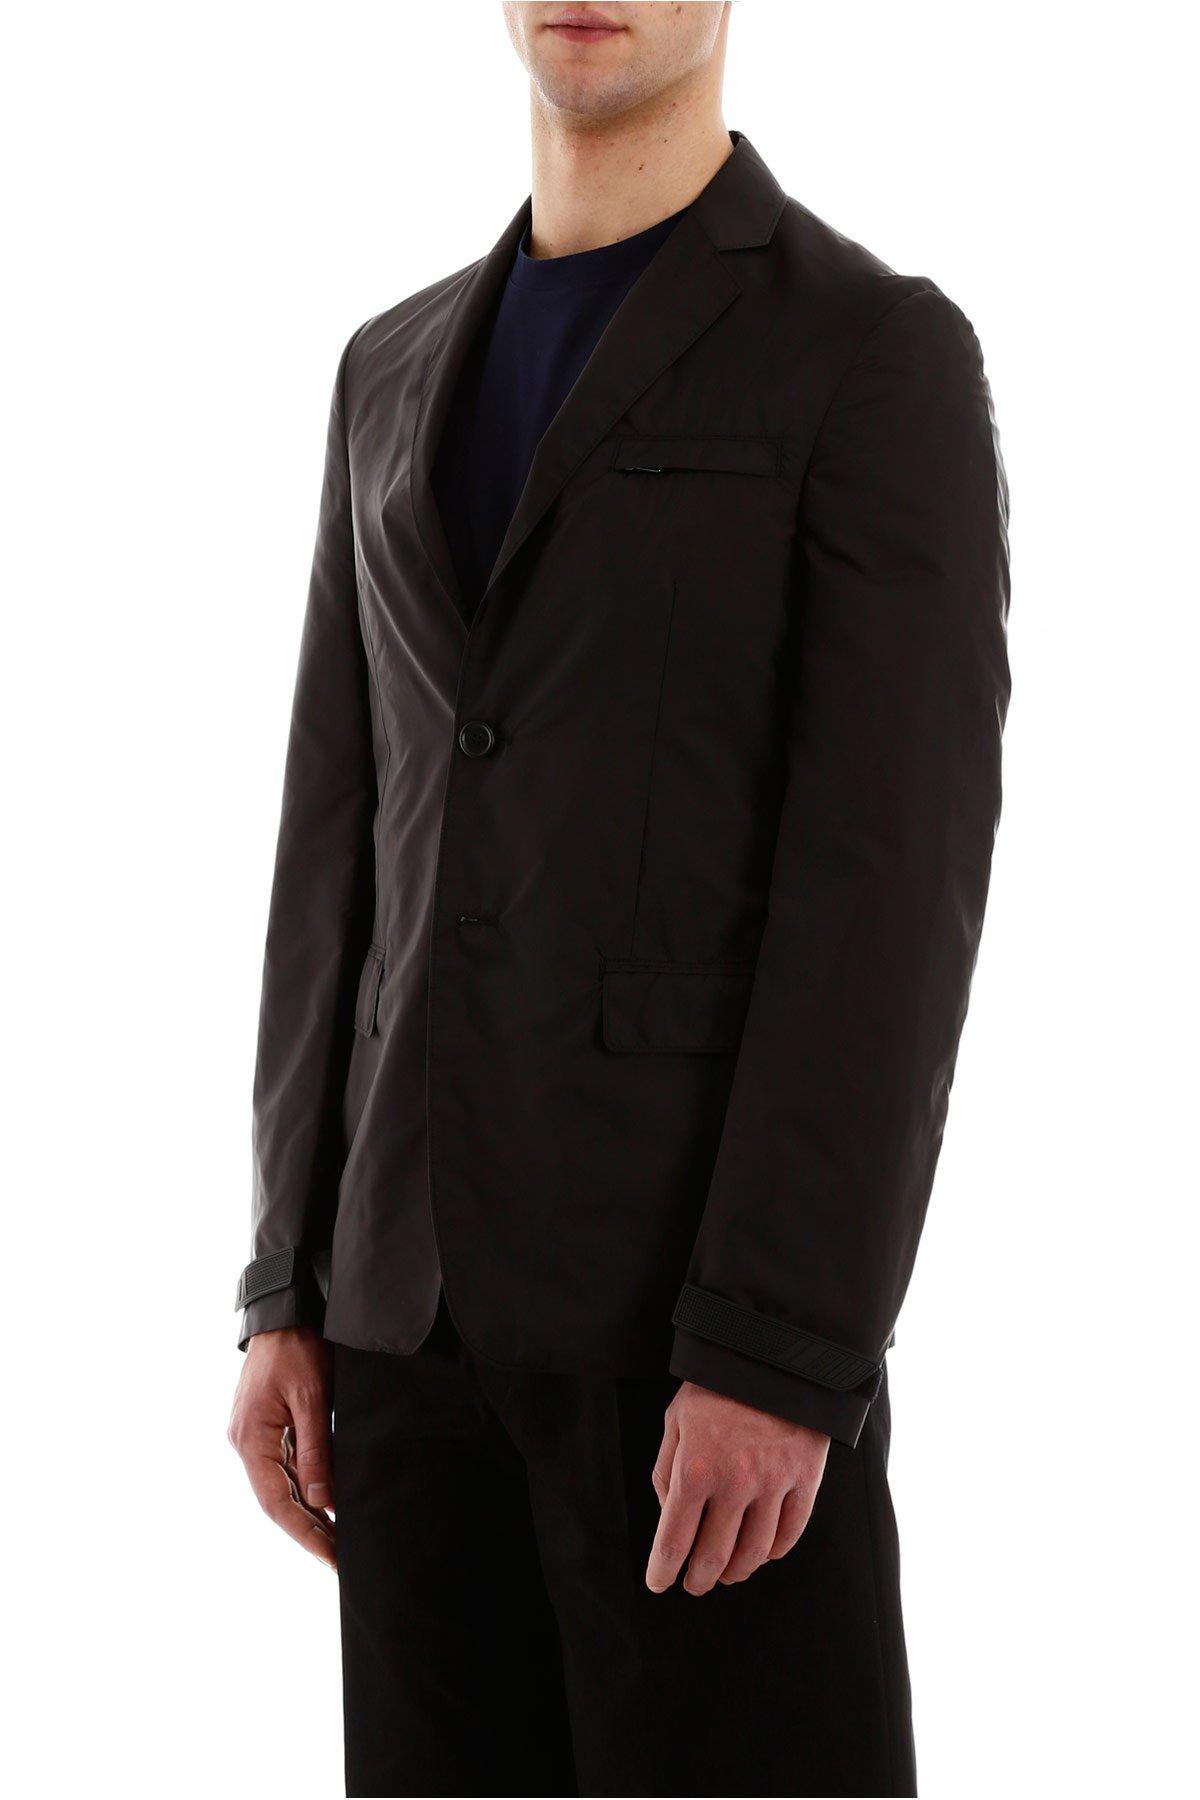 Prada Synthetic Lightweight Blazer in Black for Men - Save 1% - Lyst